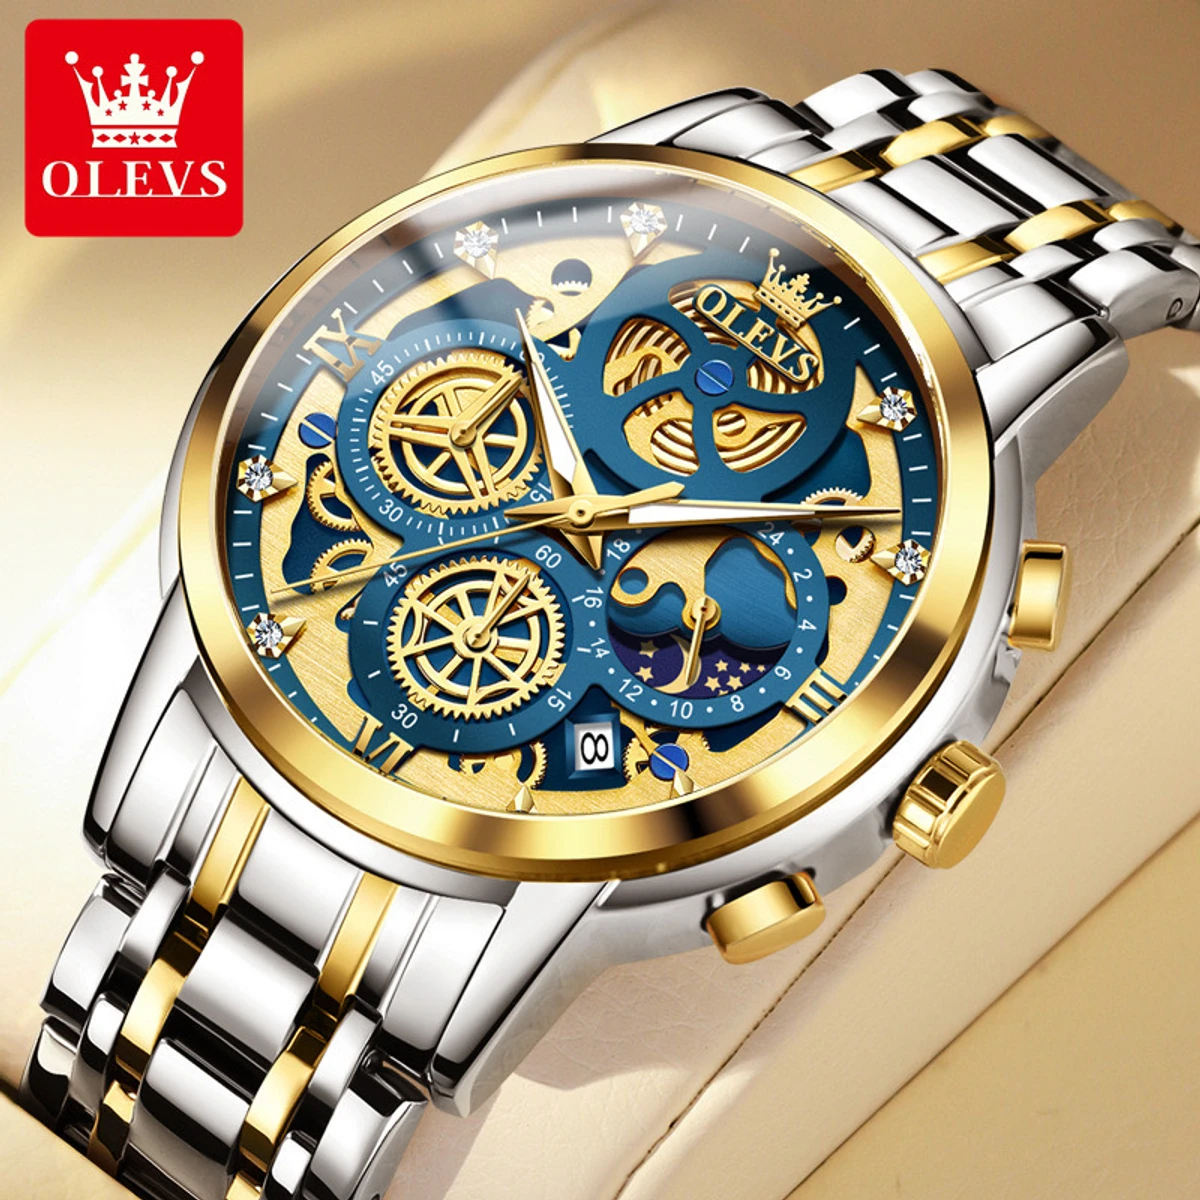 OLEVS Top Quartz Men's Brand Watch Luxury Watch Style Men's Watch- Silver & Blue